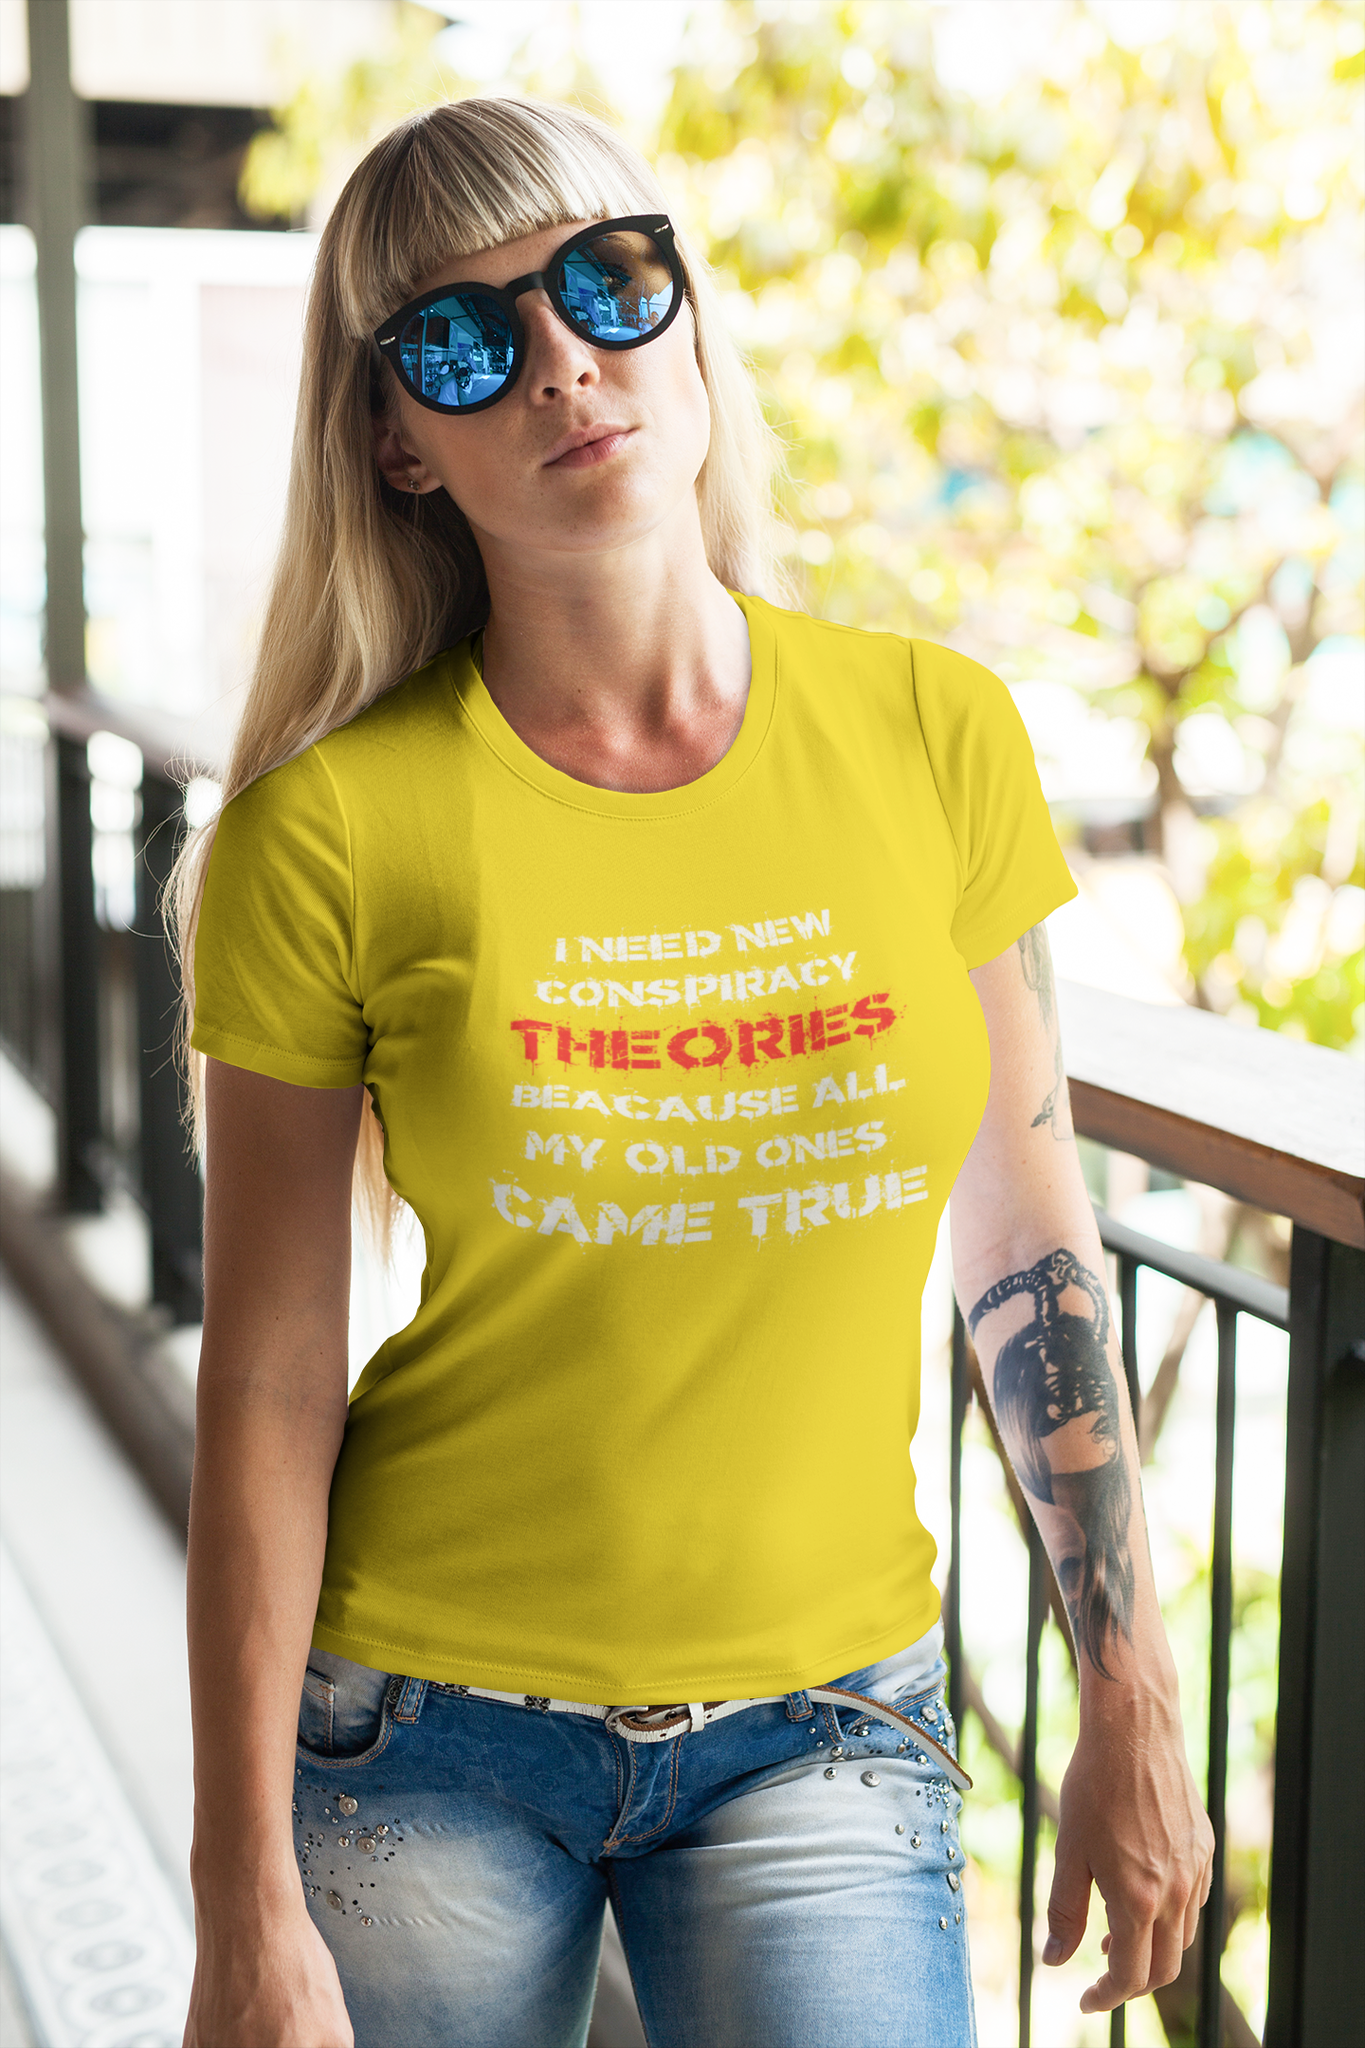 Conspiracy Theories T-Shirt Women